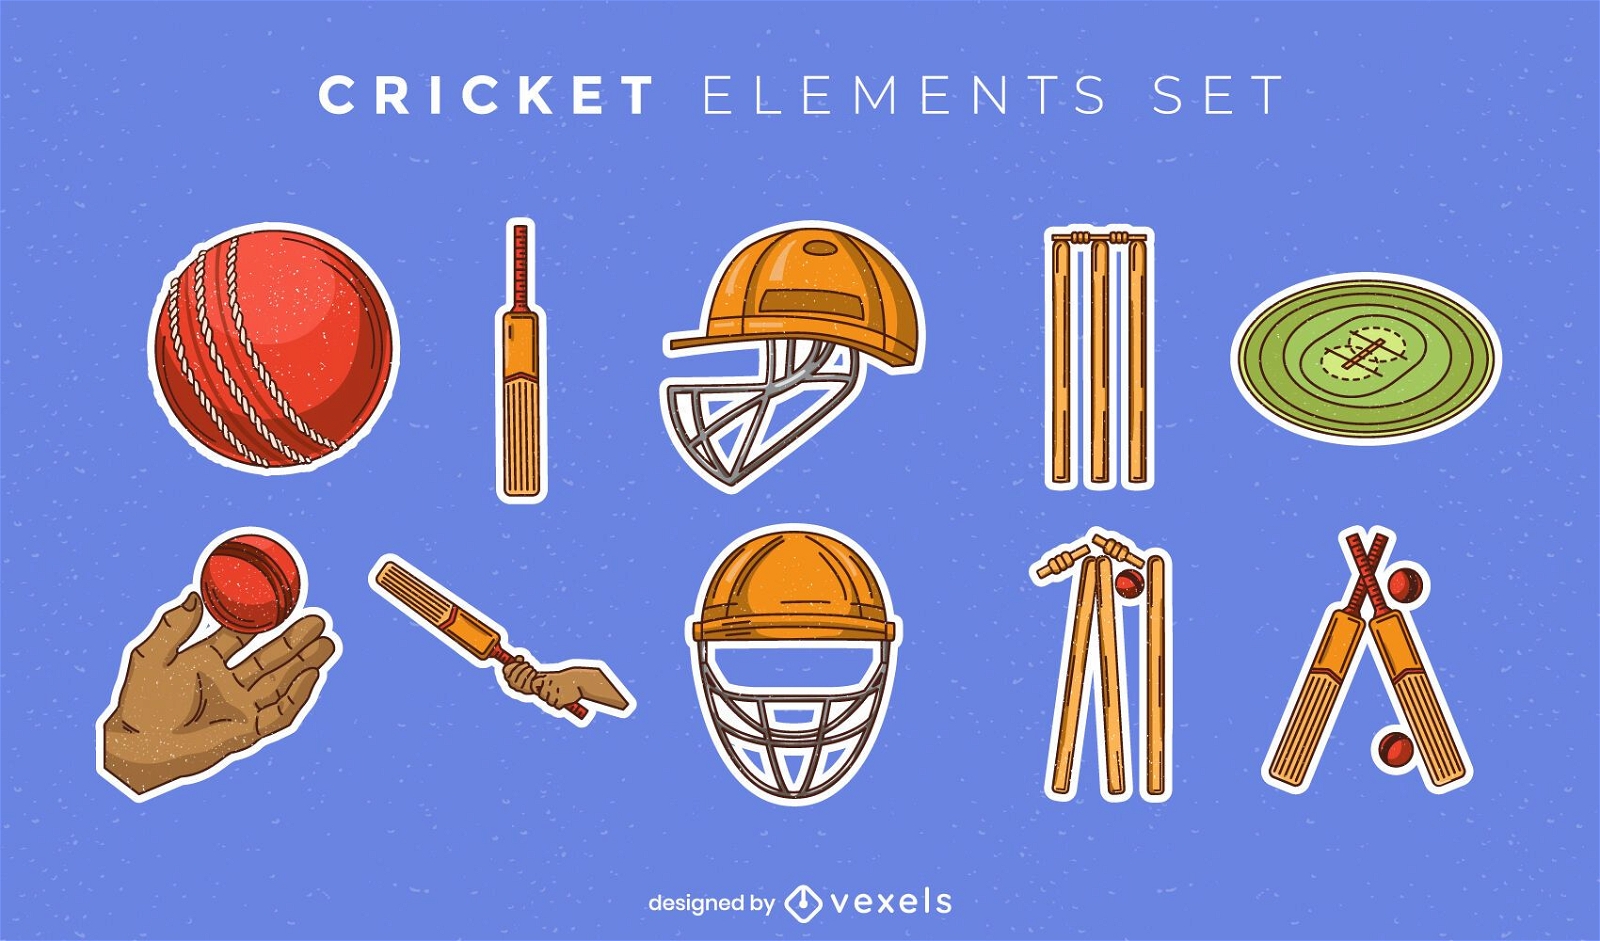 Cricket equipment element set